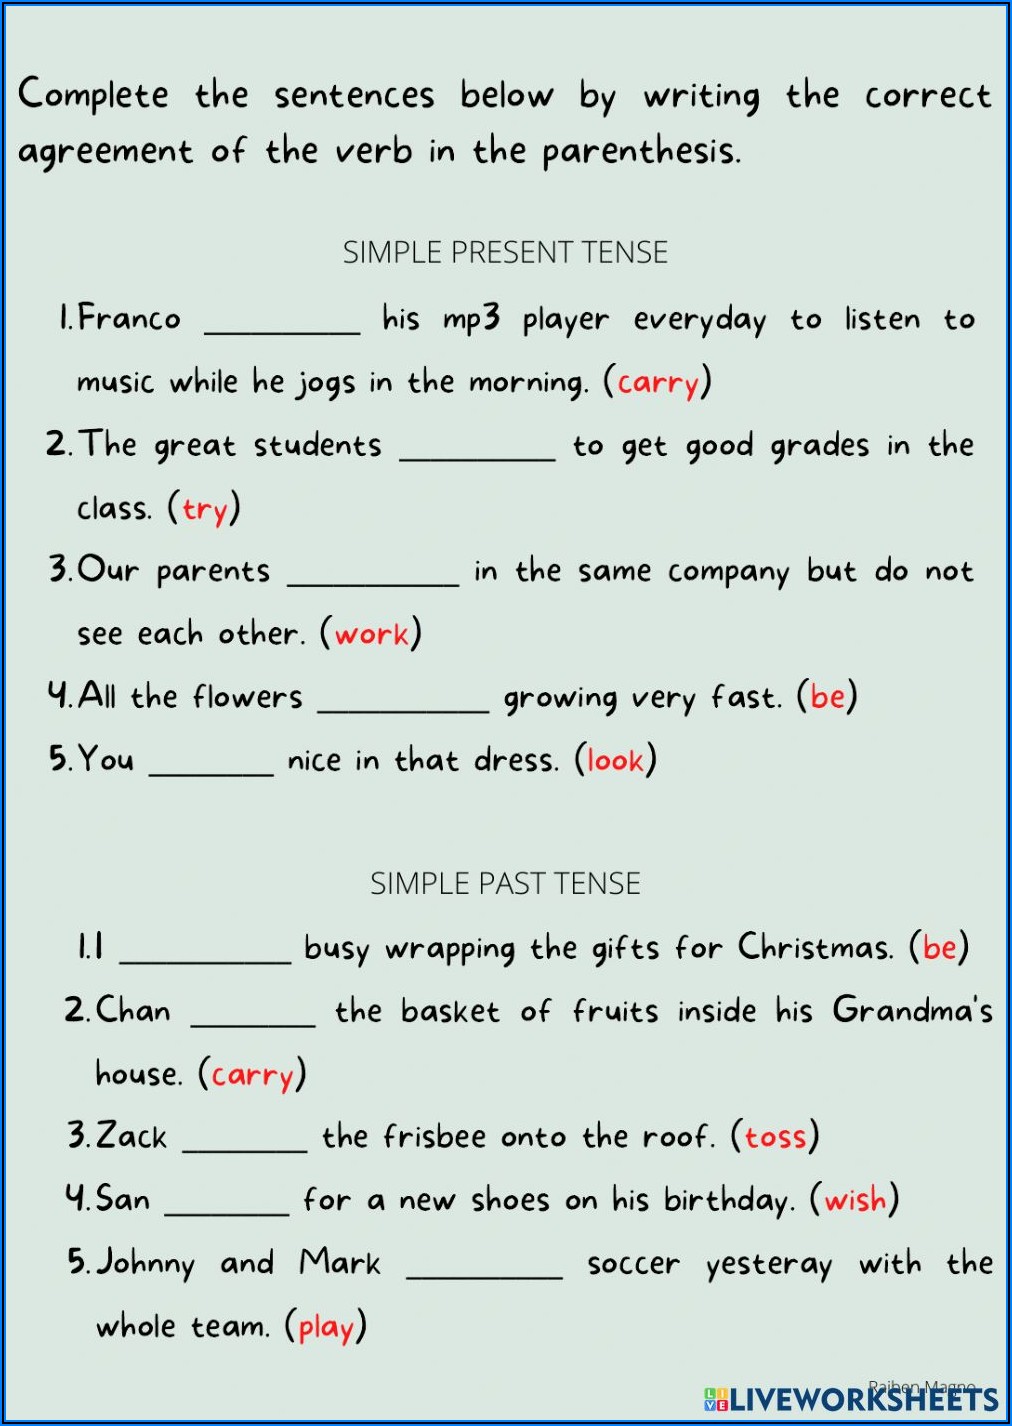 Subject Verb Agreement Quiz 6th Grade